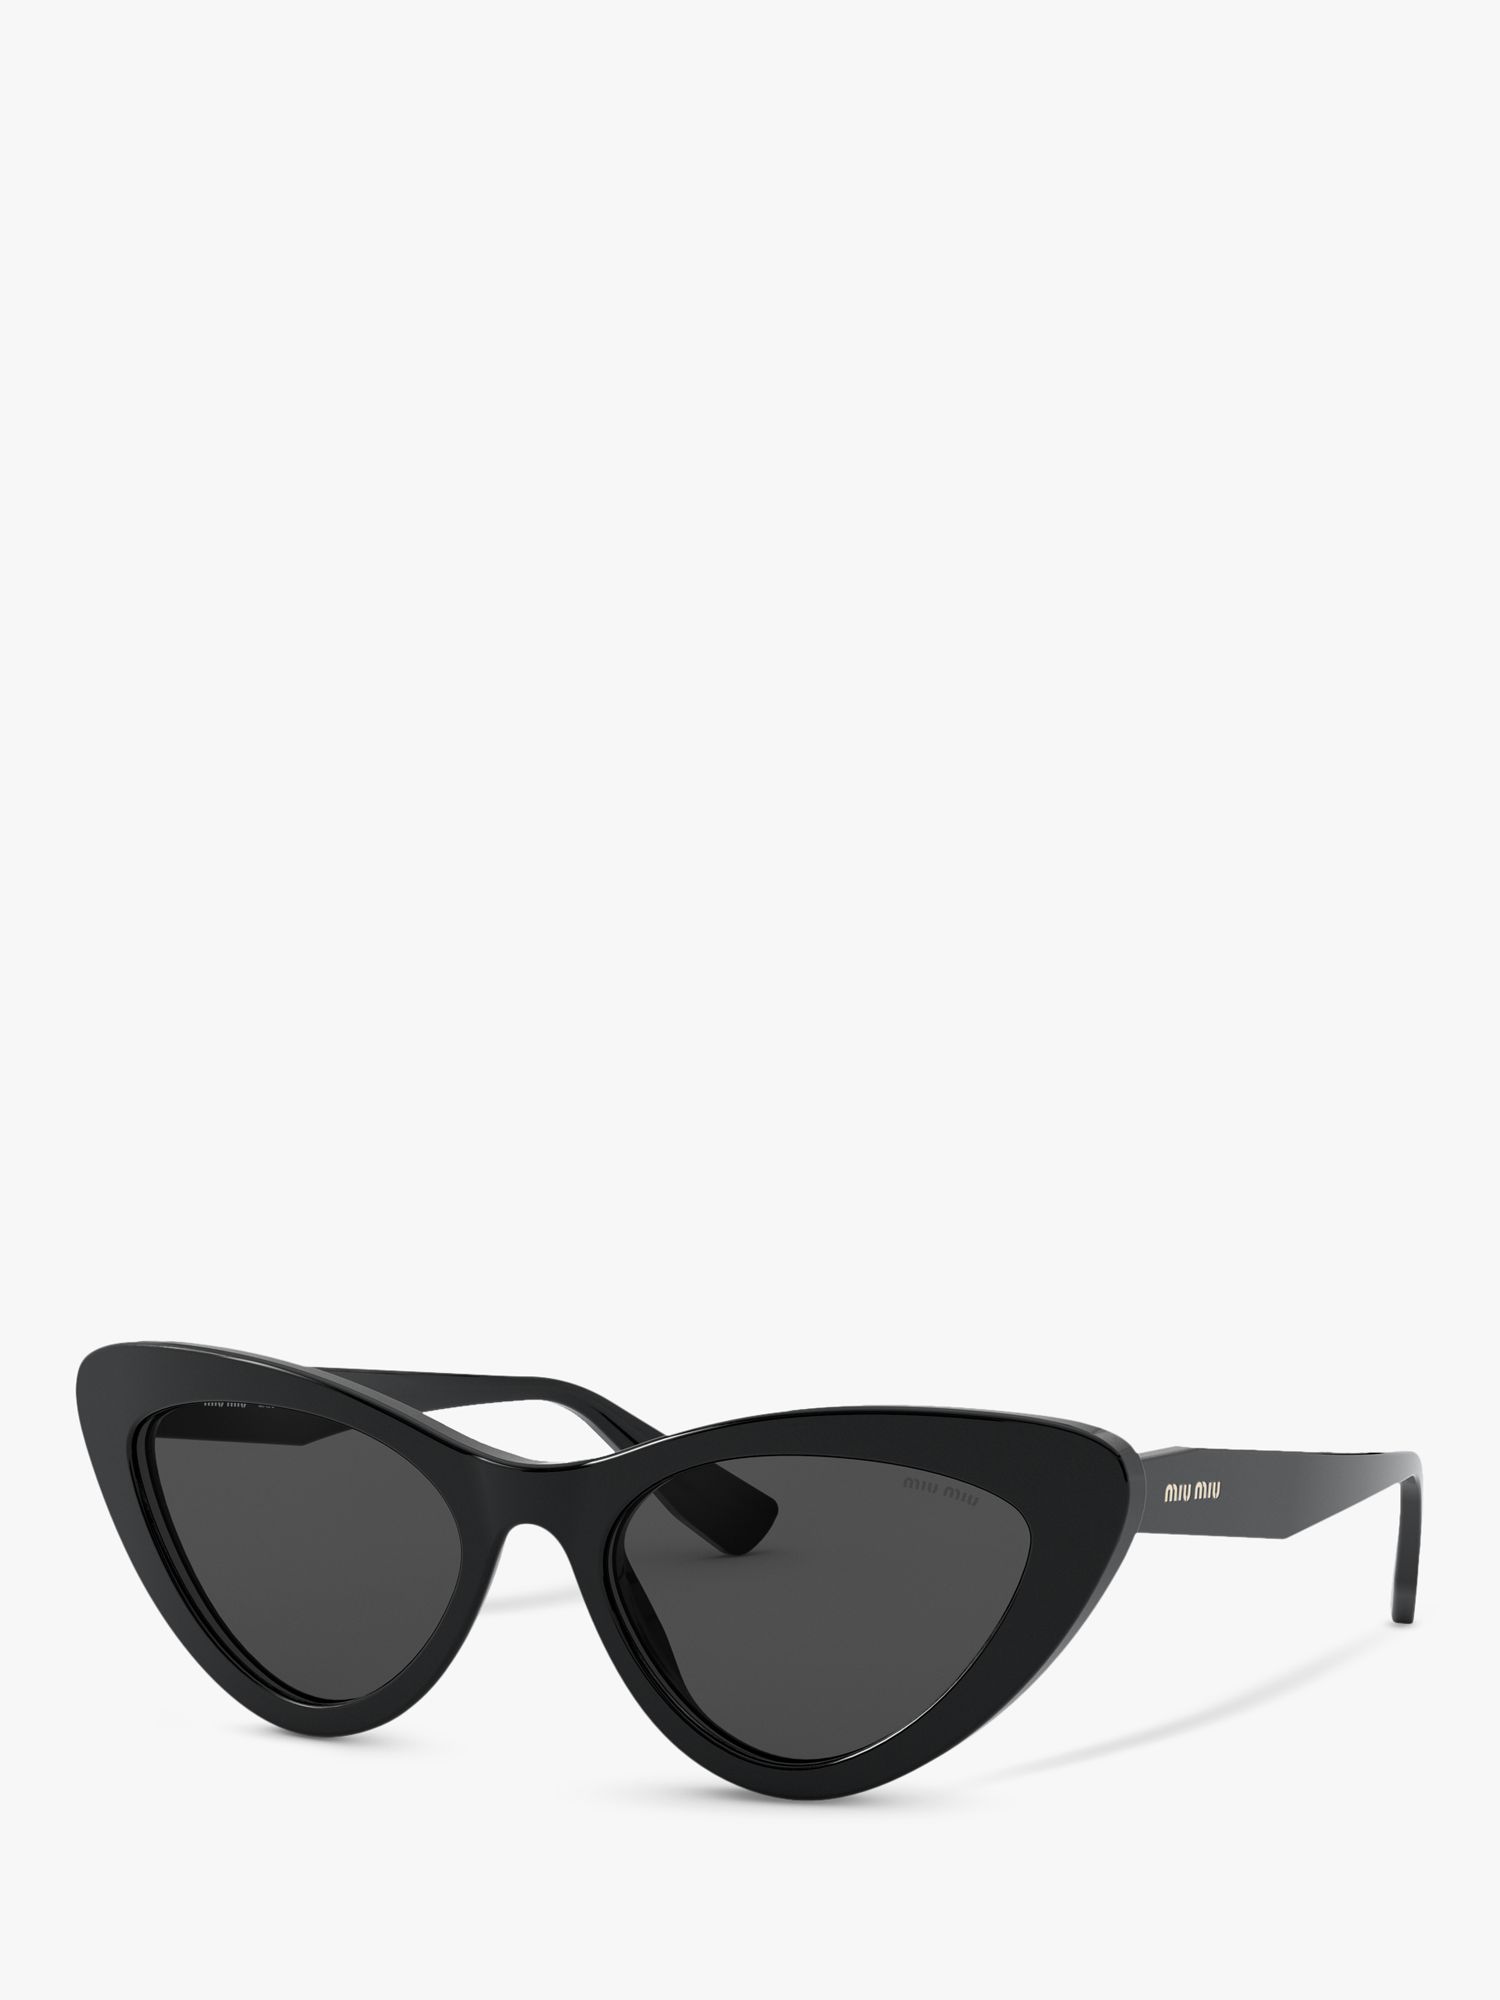 Miu Miu MU 01VS Women's Butterfly Sunglasses, Black